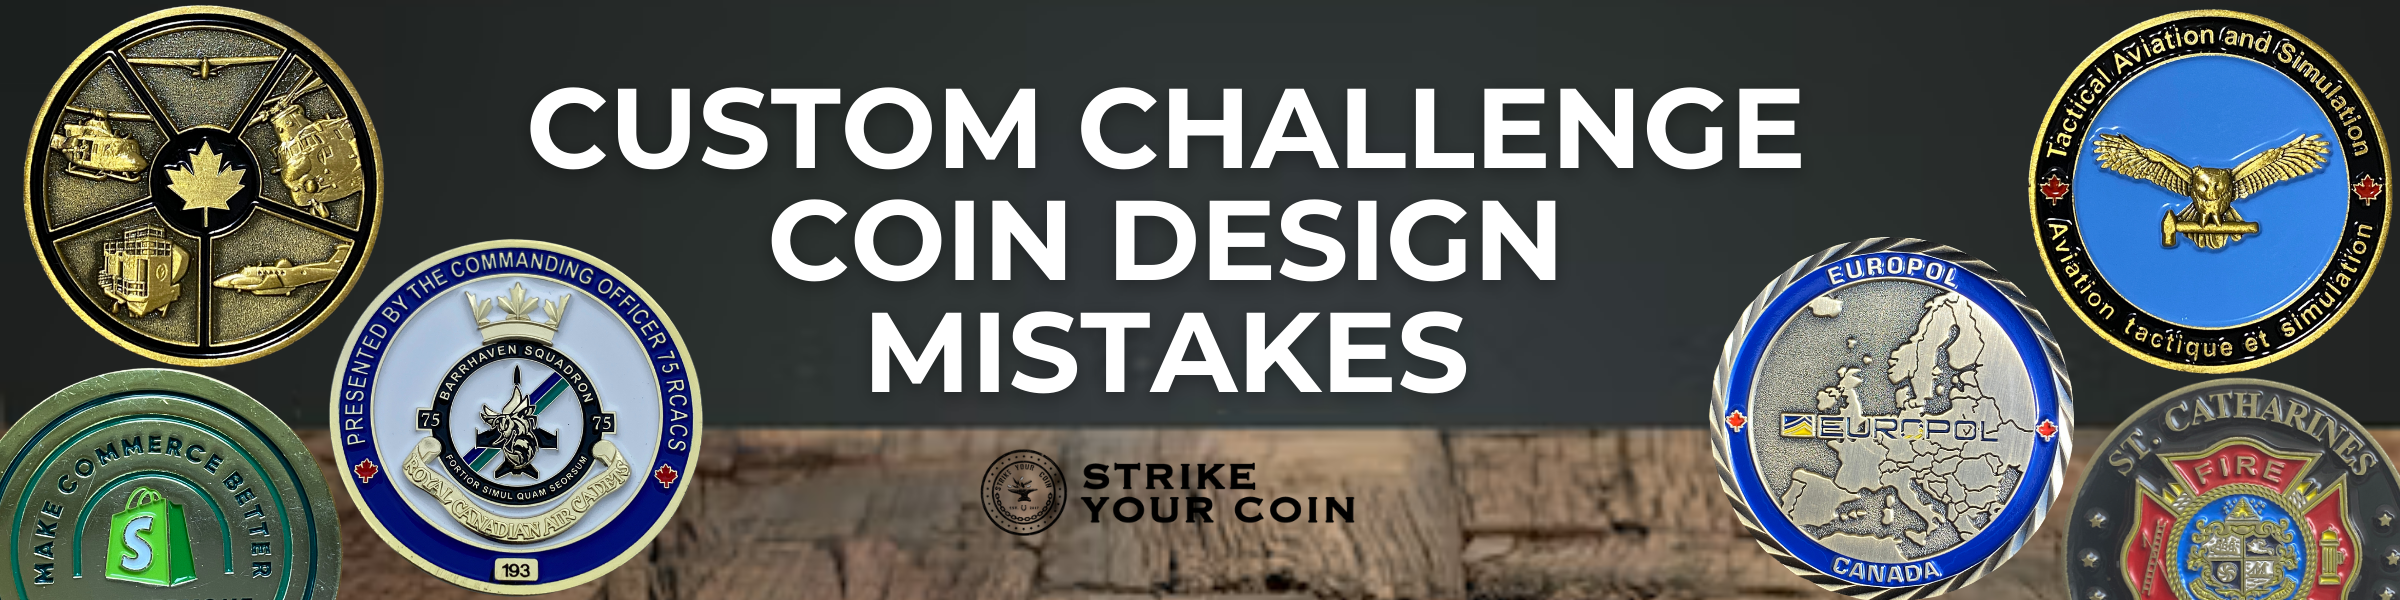 custom challenge coin design mistakes